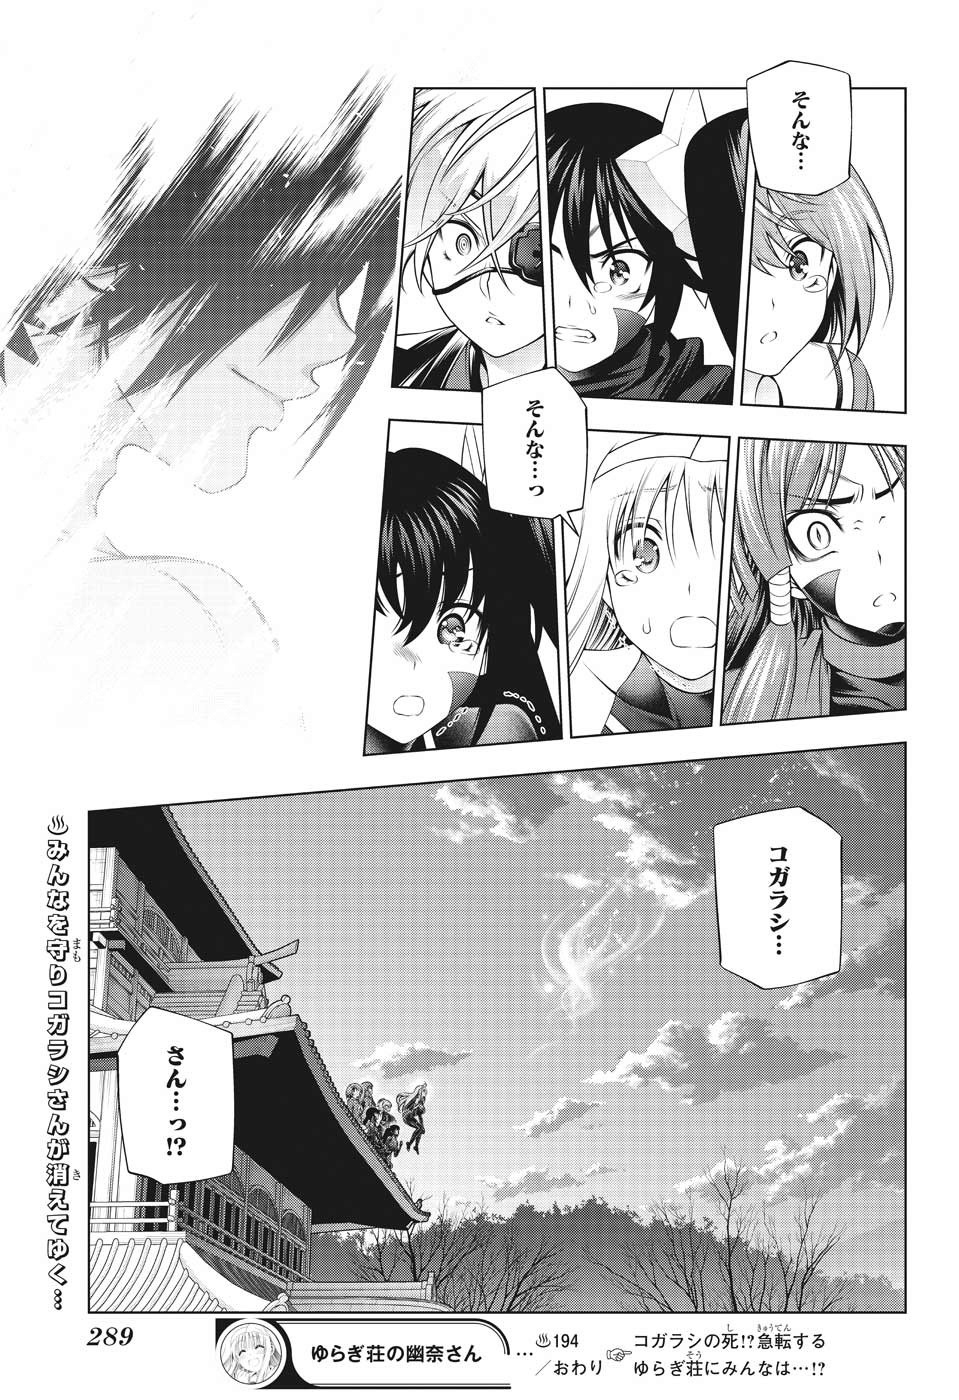 Yuragi-sou no Yuuna-san - ゆらぎ荘の幽奈さん - Chapter 194 - Page 19